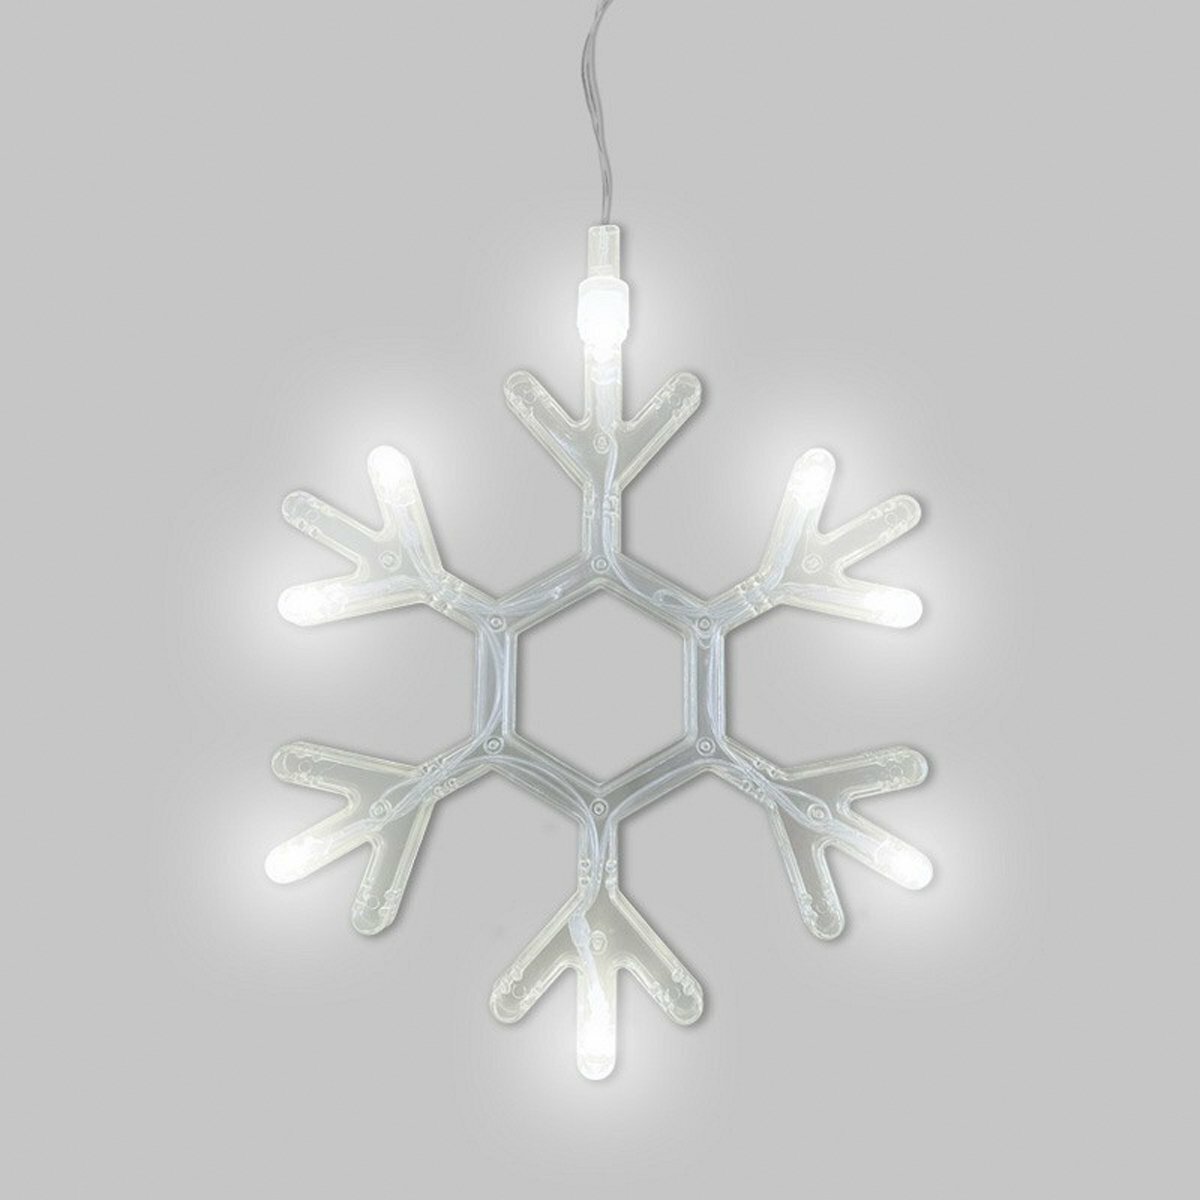 Фигурка светодиодная Neon-night Снежинка, на присоске, 19 x 17 см, белый свет